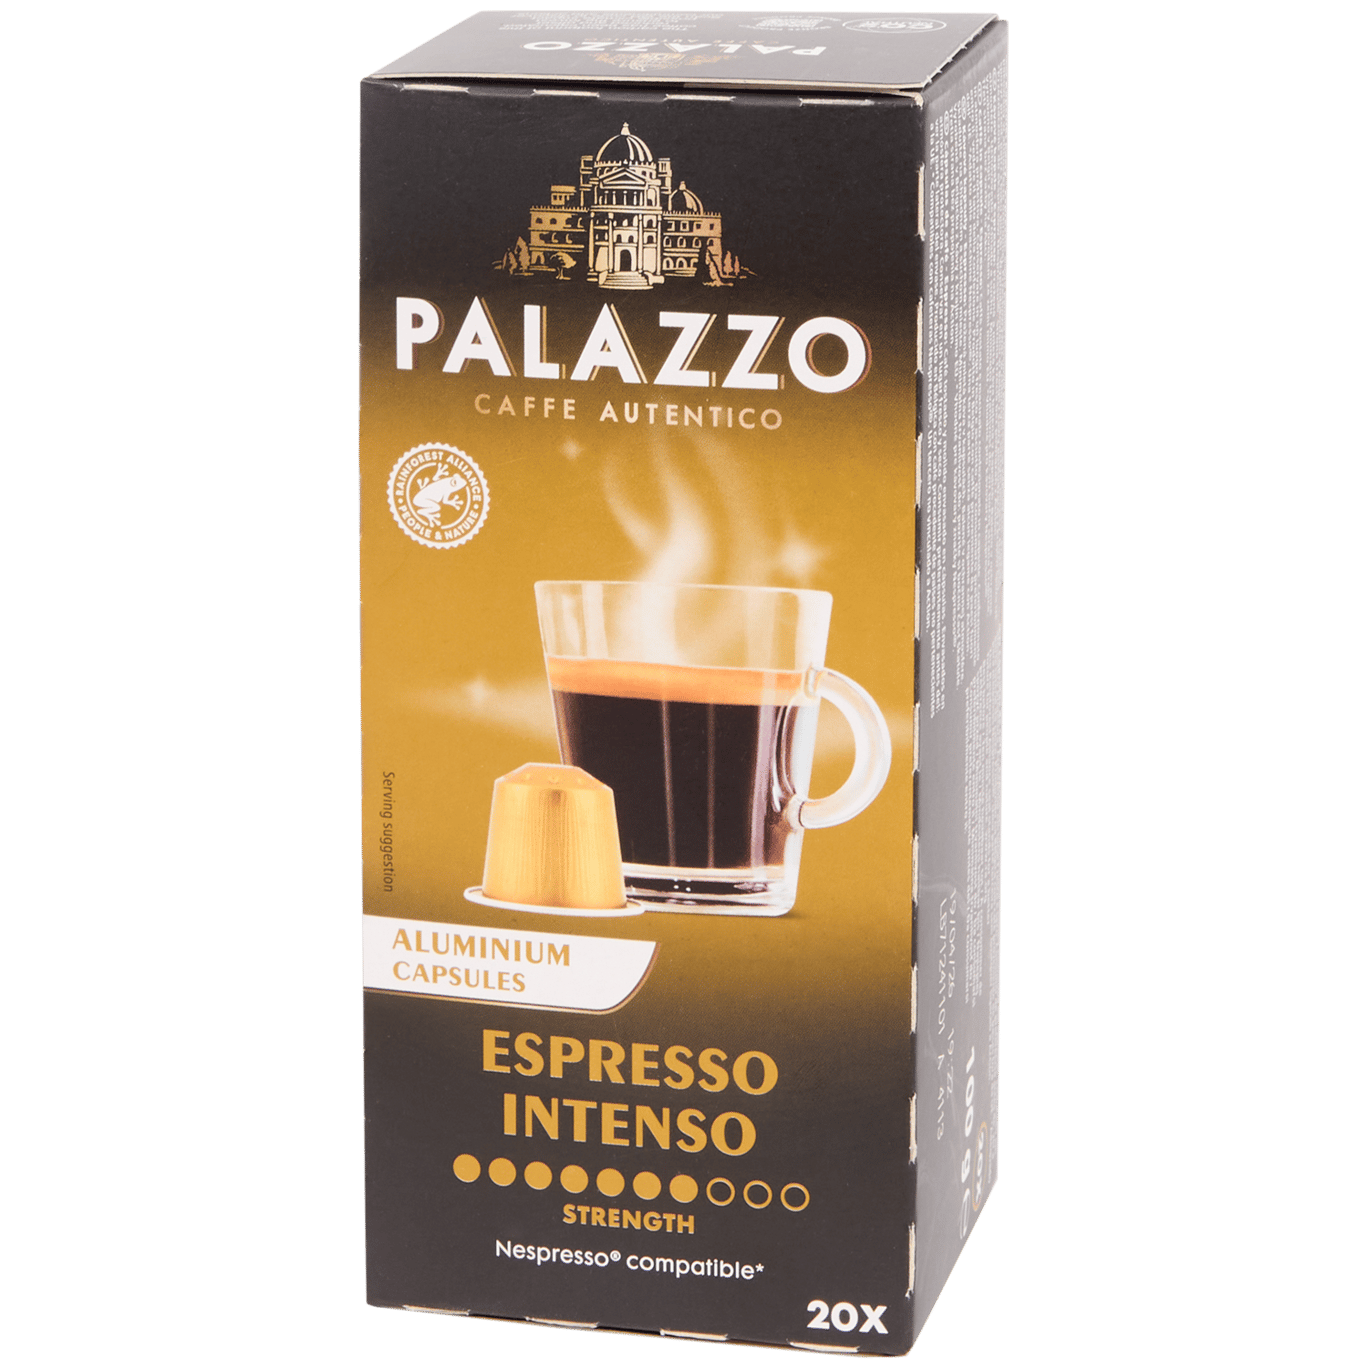 Palazzo koffiecups Espresso Intenso